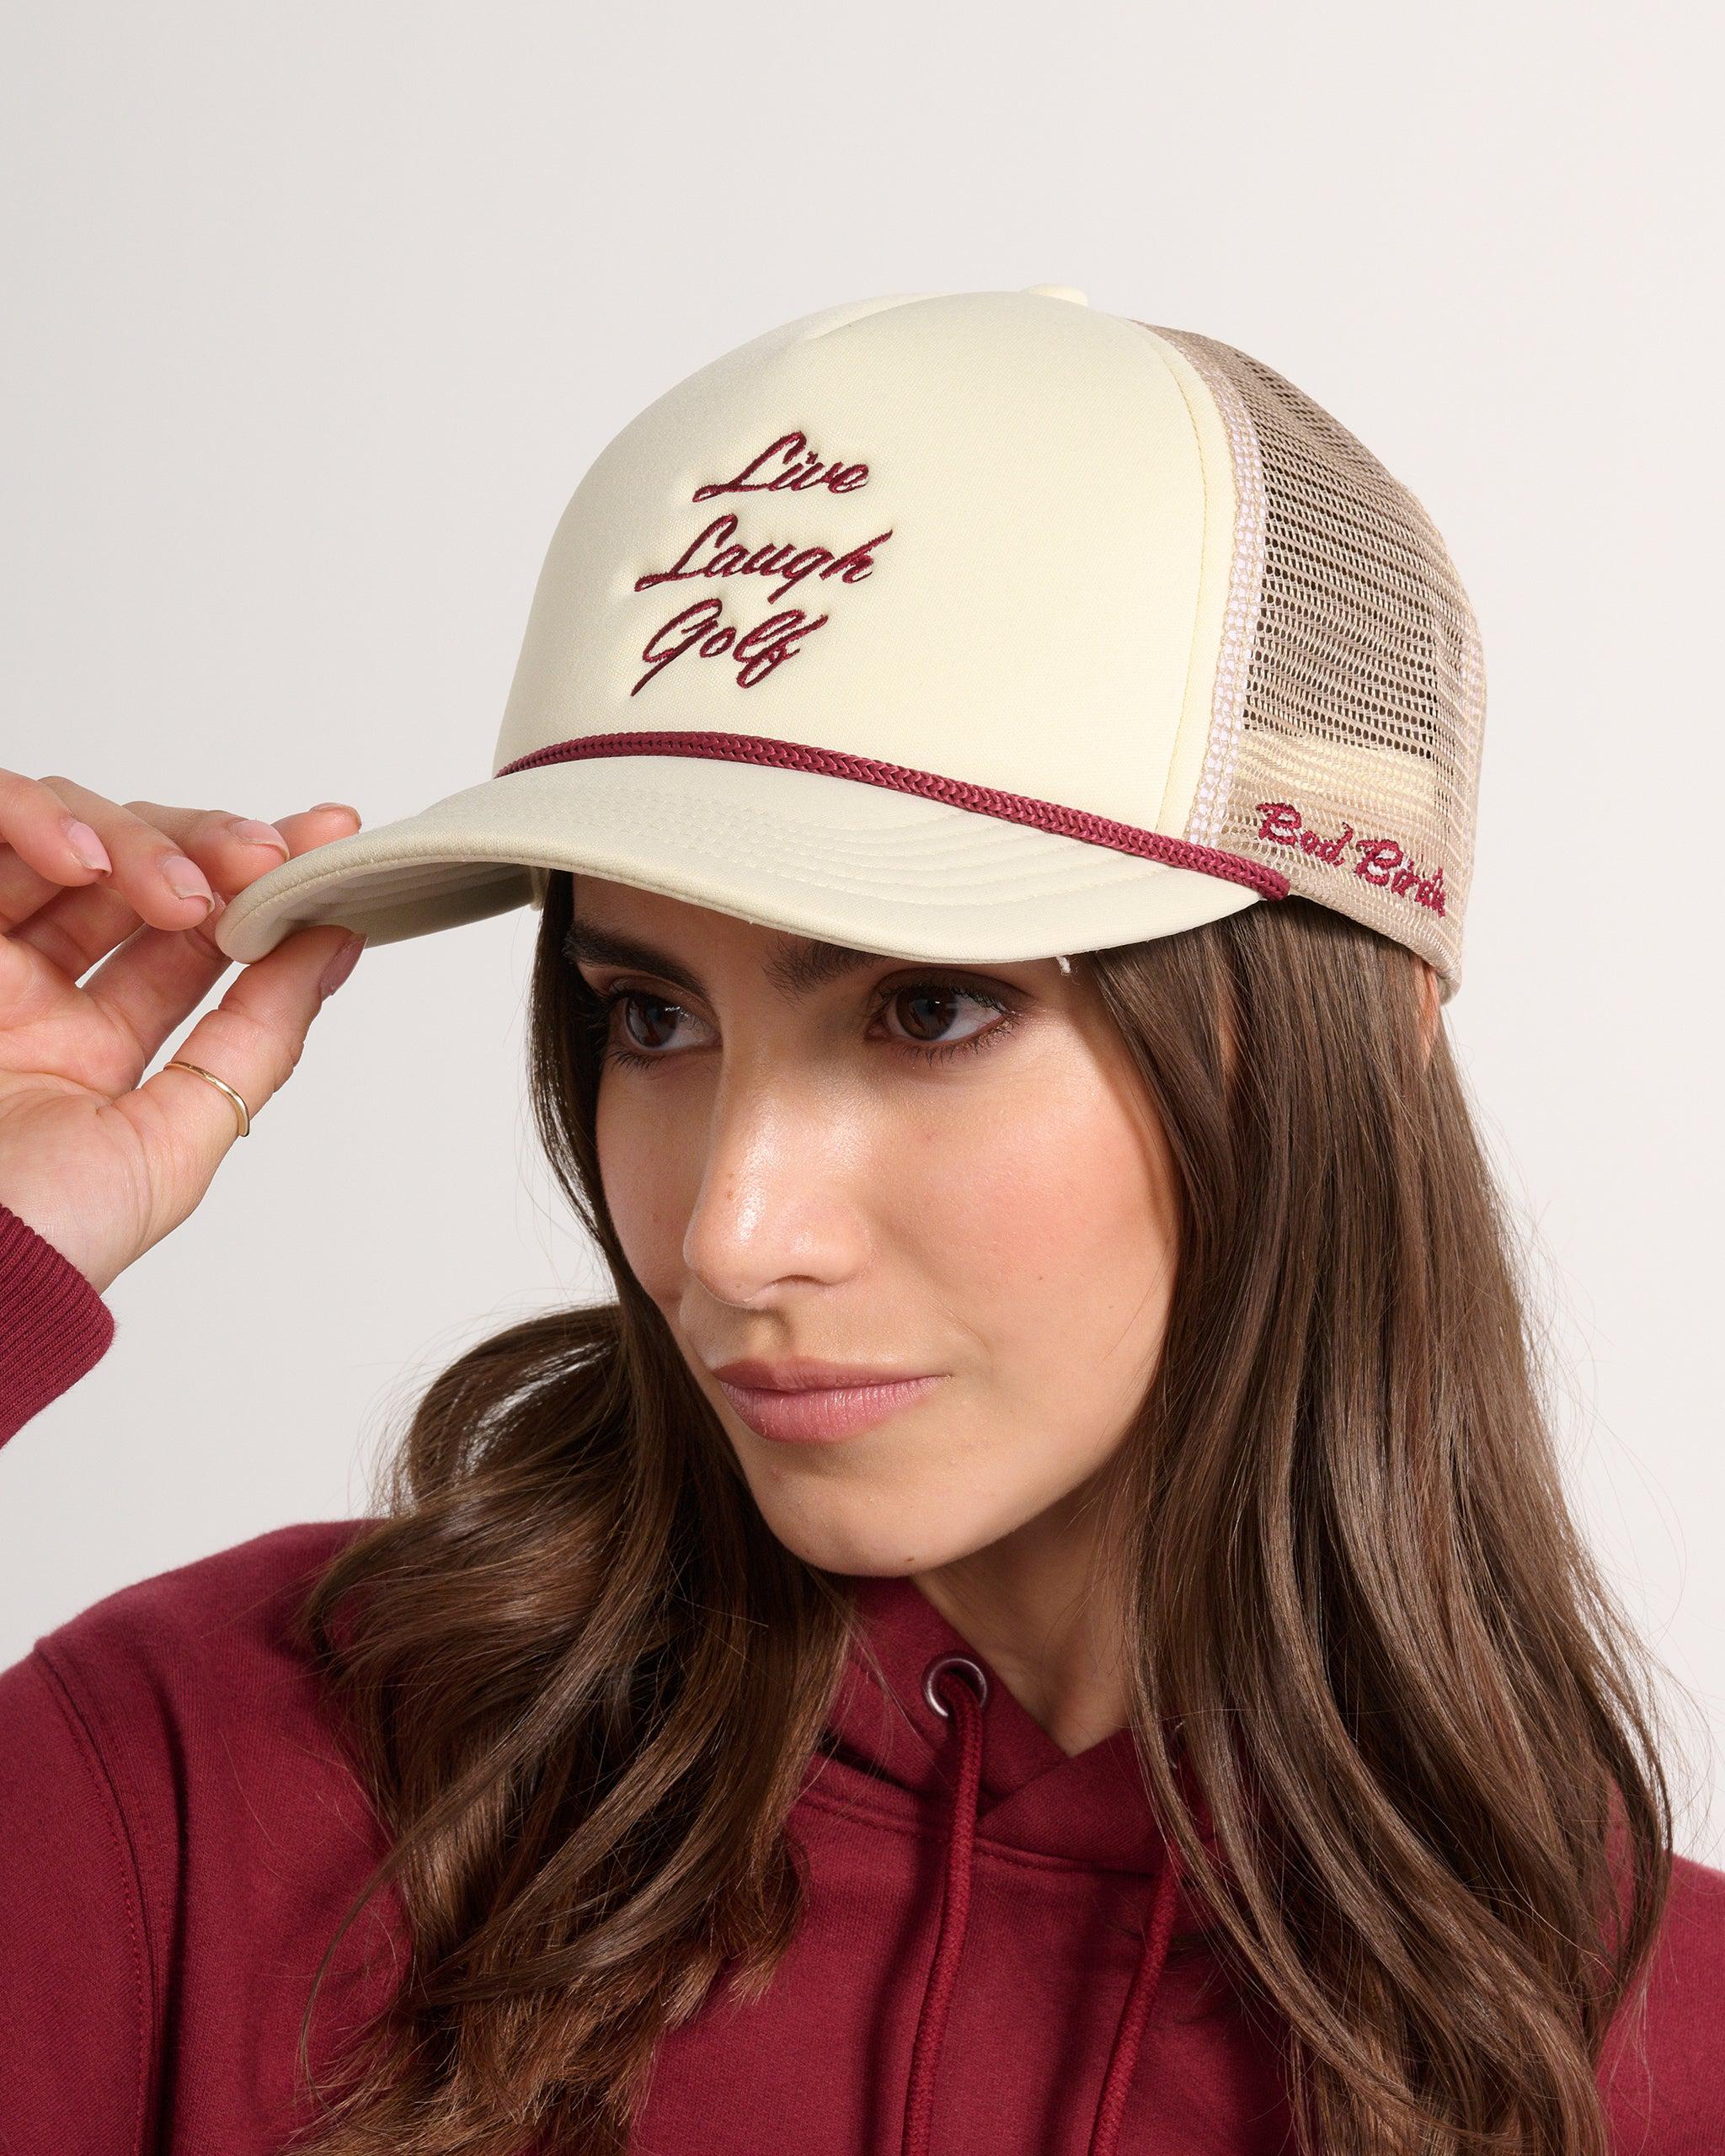 RRGEAR Trucker Hat Women Fitted Trucker Hats for Men Trucker Hat Funny  Light Weight Tennis Cap